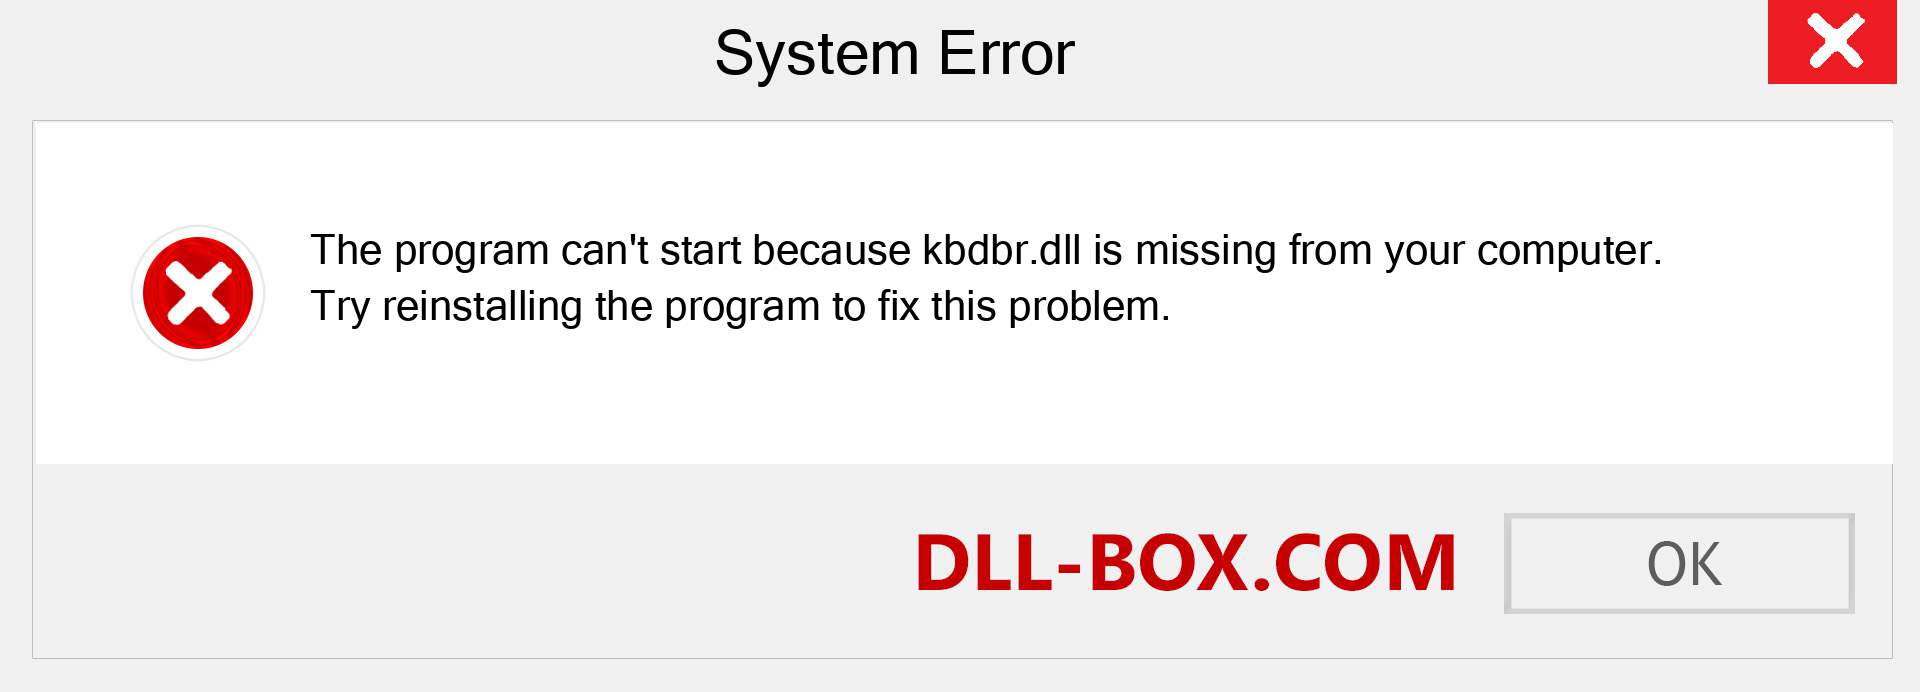  kbdbr.dll file is missing?. Download for Windows 7, 8, 10 - Fix  kbdbr dll Missing Error on Windows, photos, images